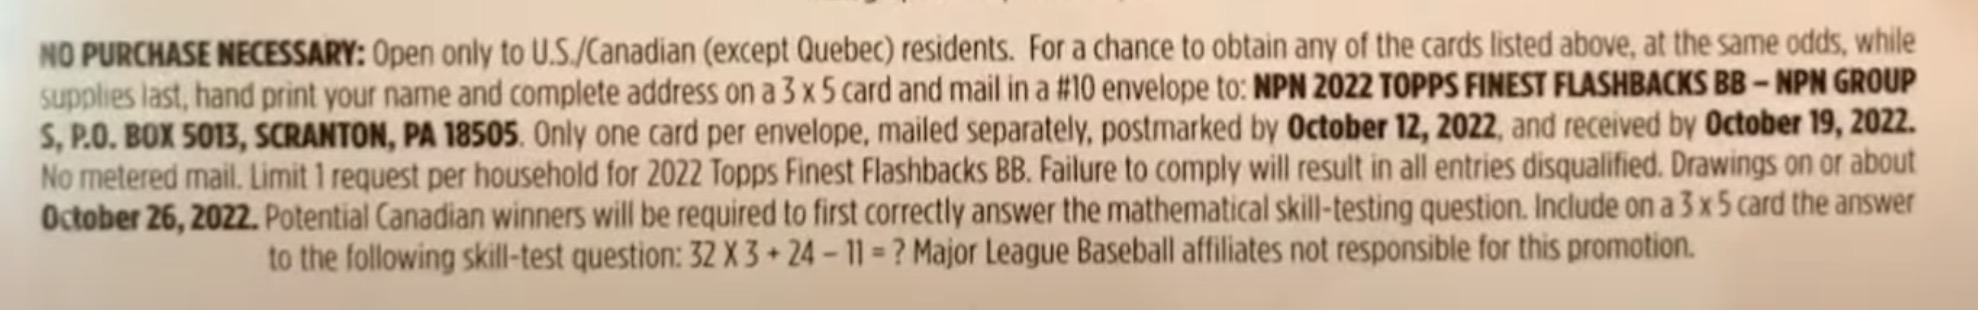 2022 Topps Finest Flashbacks Baseball Cards - Hobby Box - No Purchase Necessary (NPN) Information